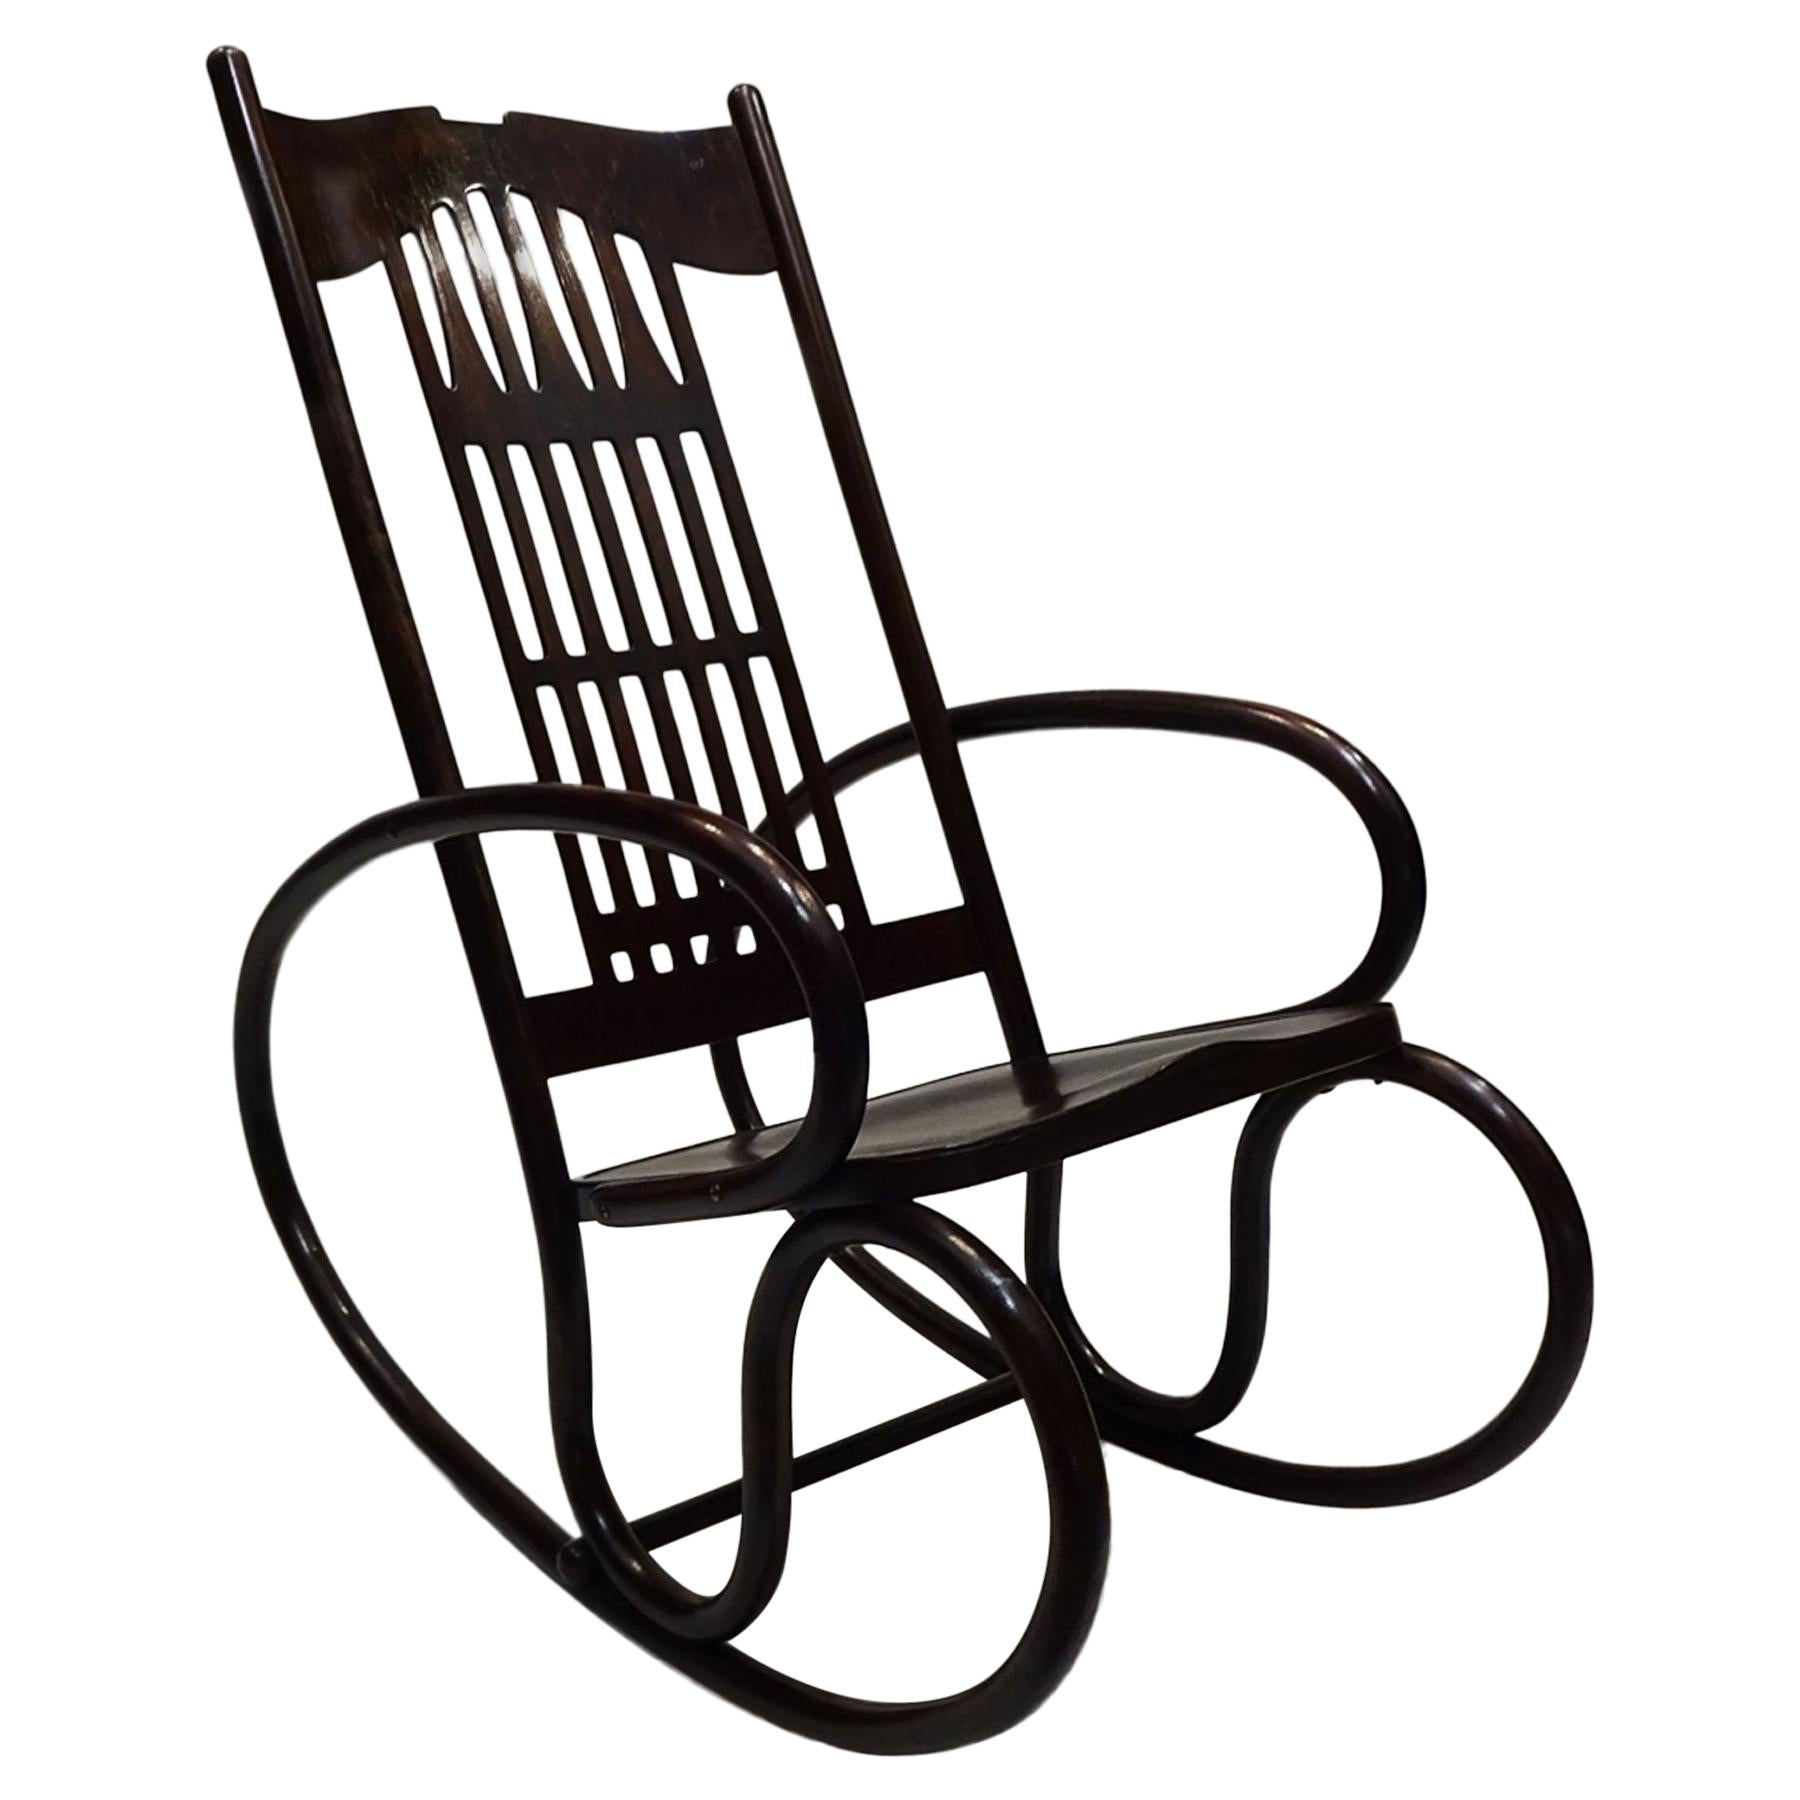 Art Nouveau Gustav Siegel Designed Jacob and Josef Kohn Bentwood Rocking Chair